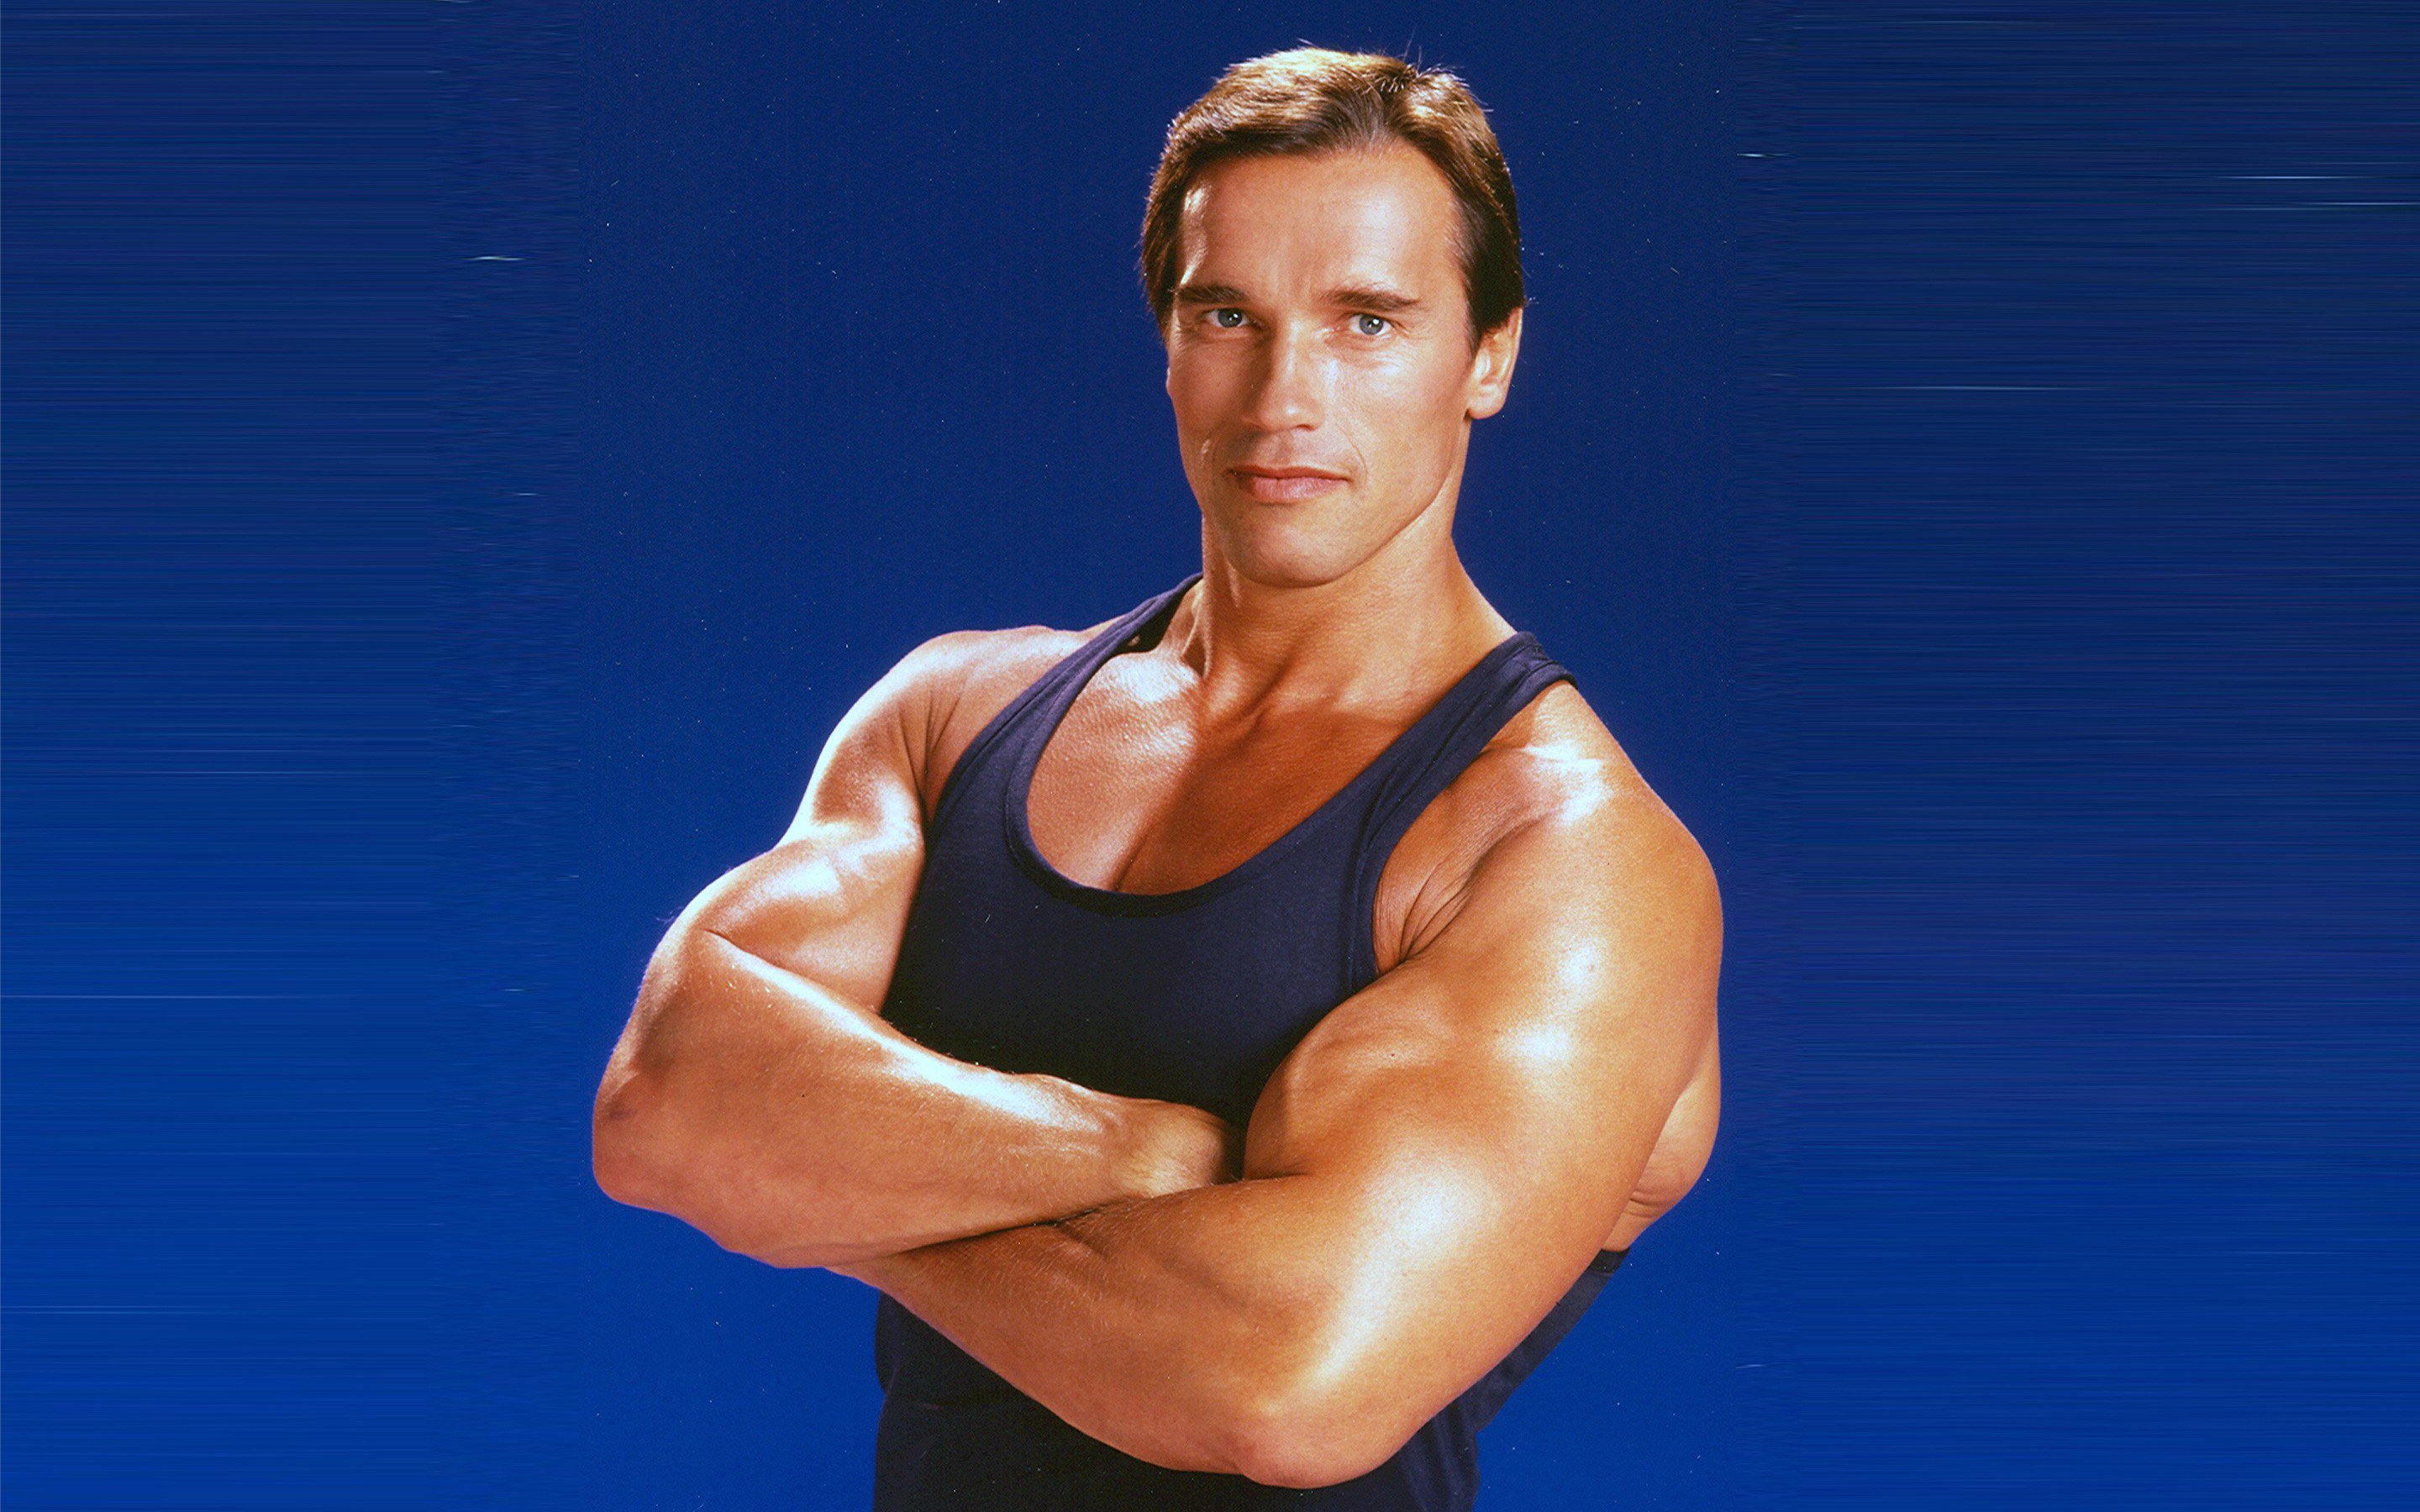 Portrait of the muscular Arnold Schwarzenegger